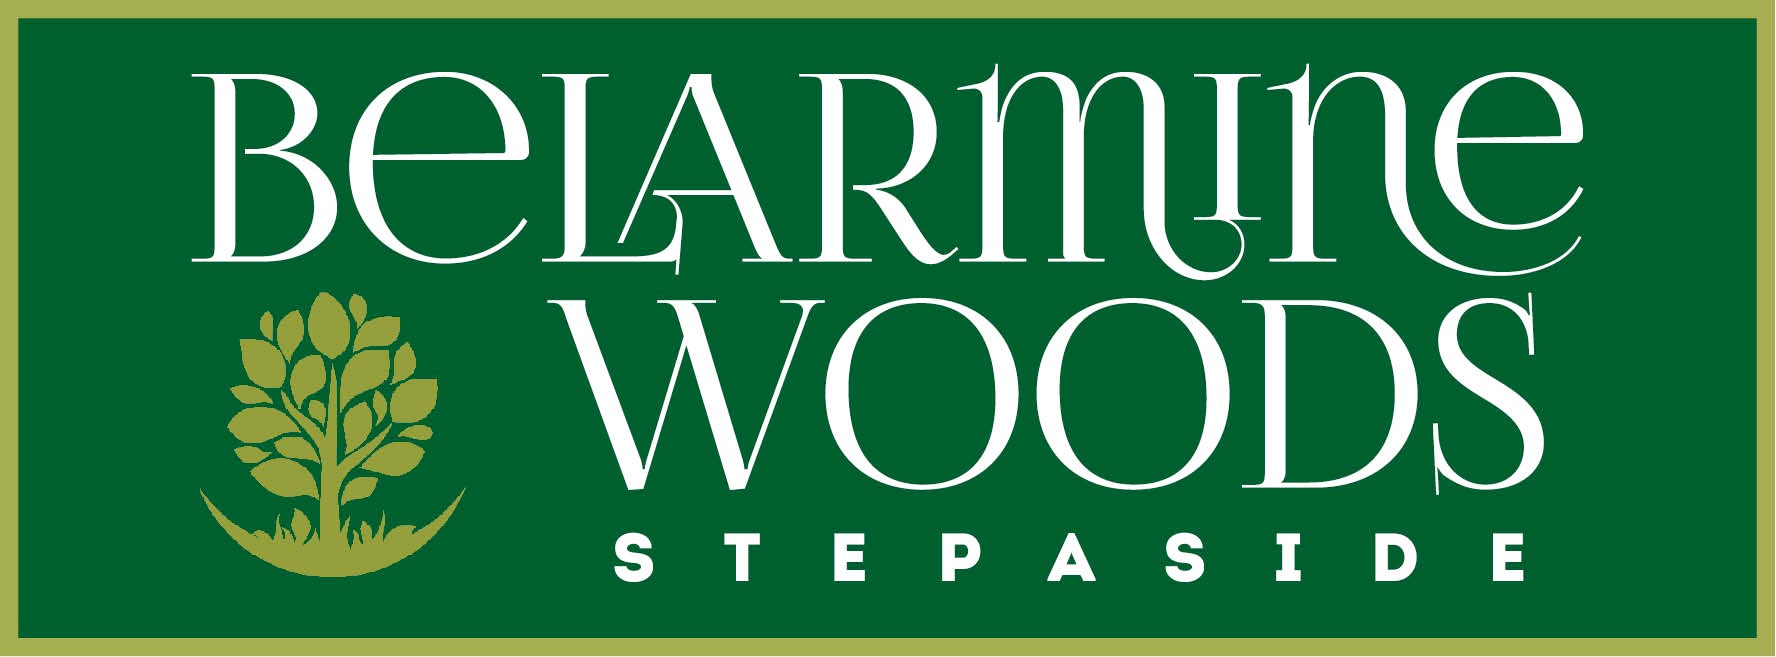 Belarmine Woods Housing Development logo